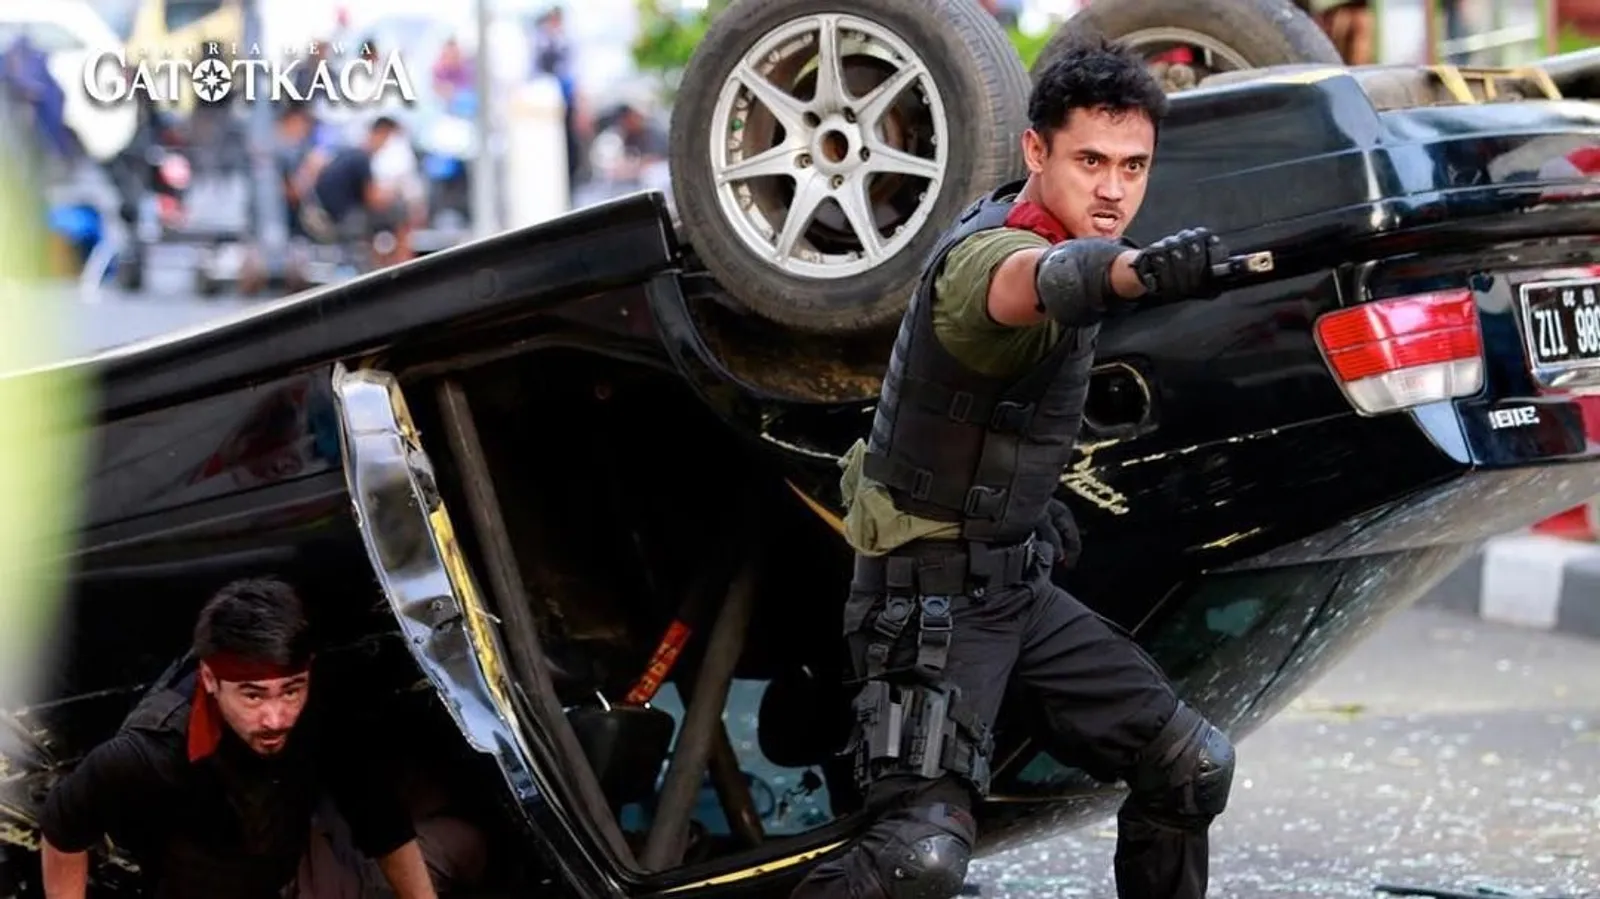 Jadi Superhero Baru Asli Indonesia, Ini 5 Fakta Gatotkaca The Movie